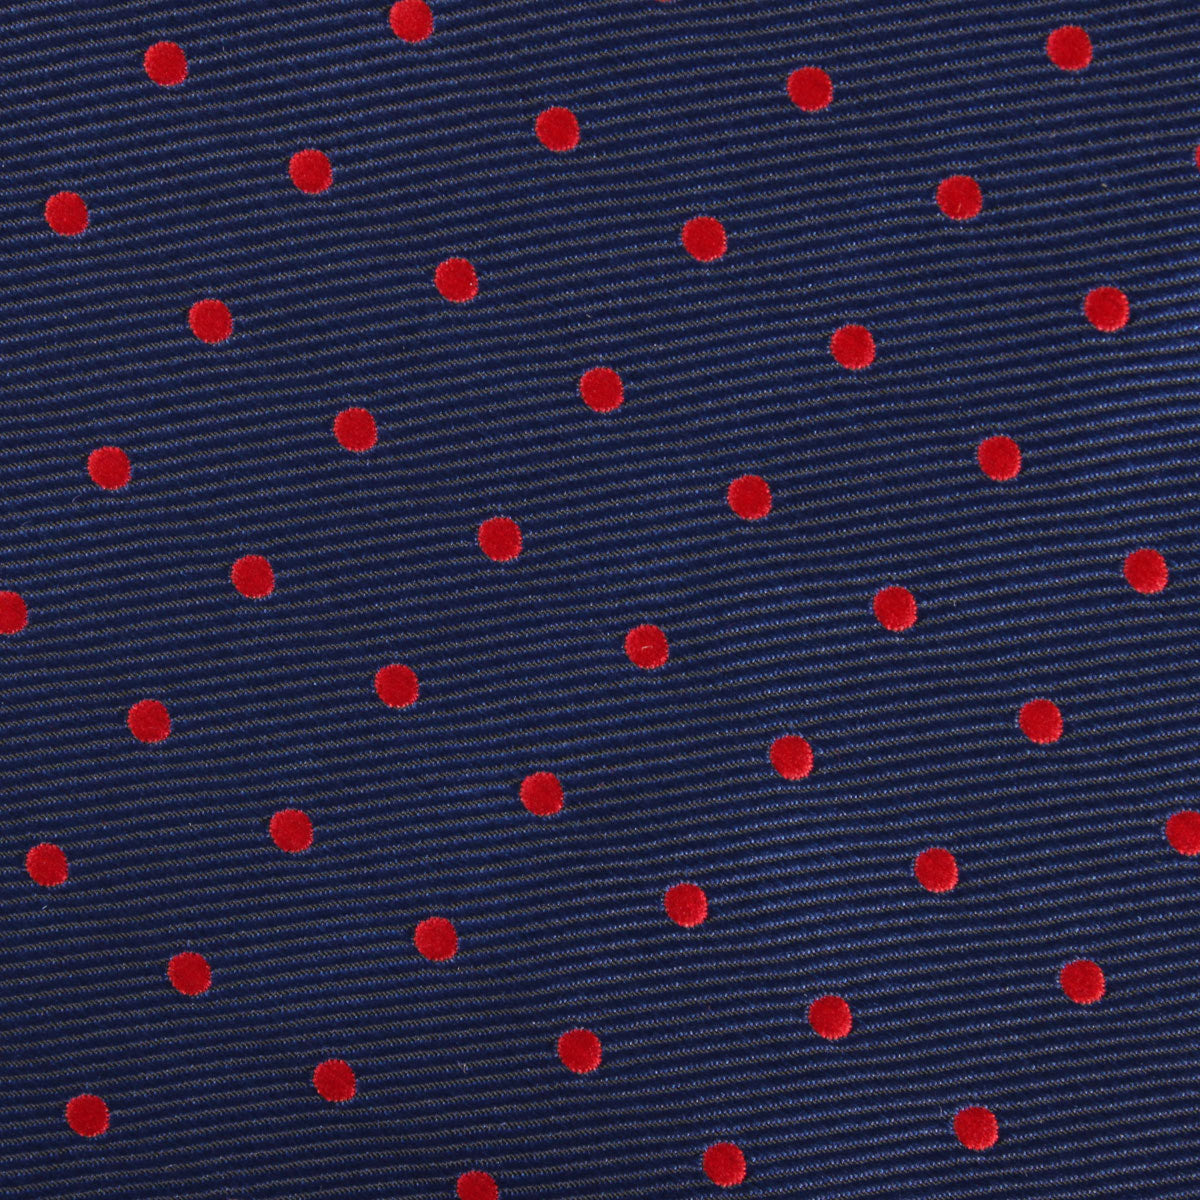 Navy on Red Mini Pin Dots Fabric Kids Bowtie